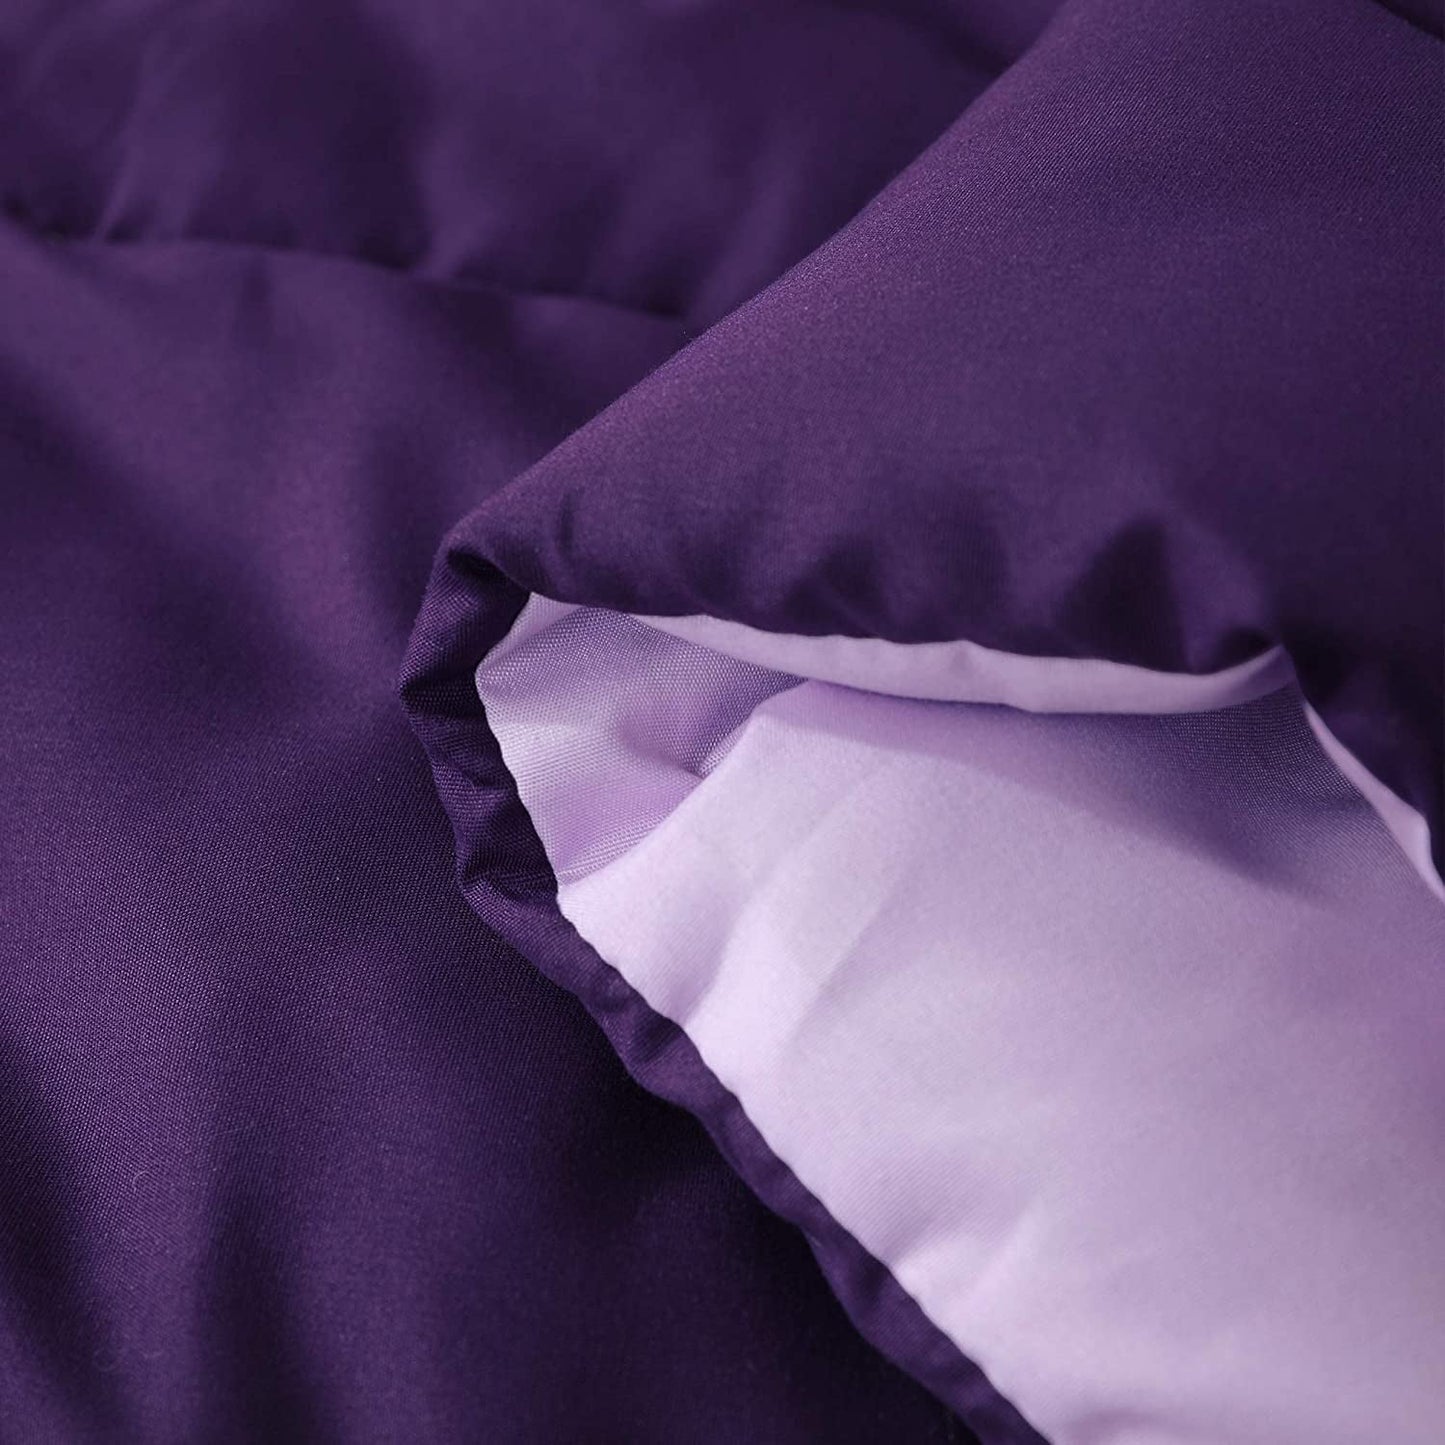 Exclusivo Mezcla Lightweight Reversible 3-Piece Comforter Set All Seasons, Down Alternative Comforter with 2 Pillow Shams, Queen Size, Deep Purple/ Lilac